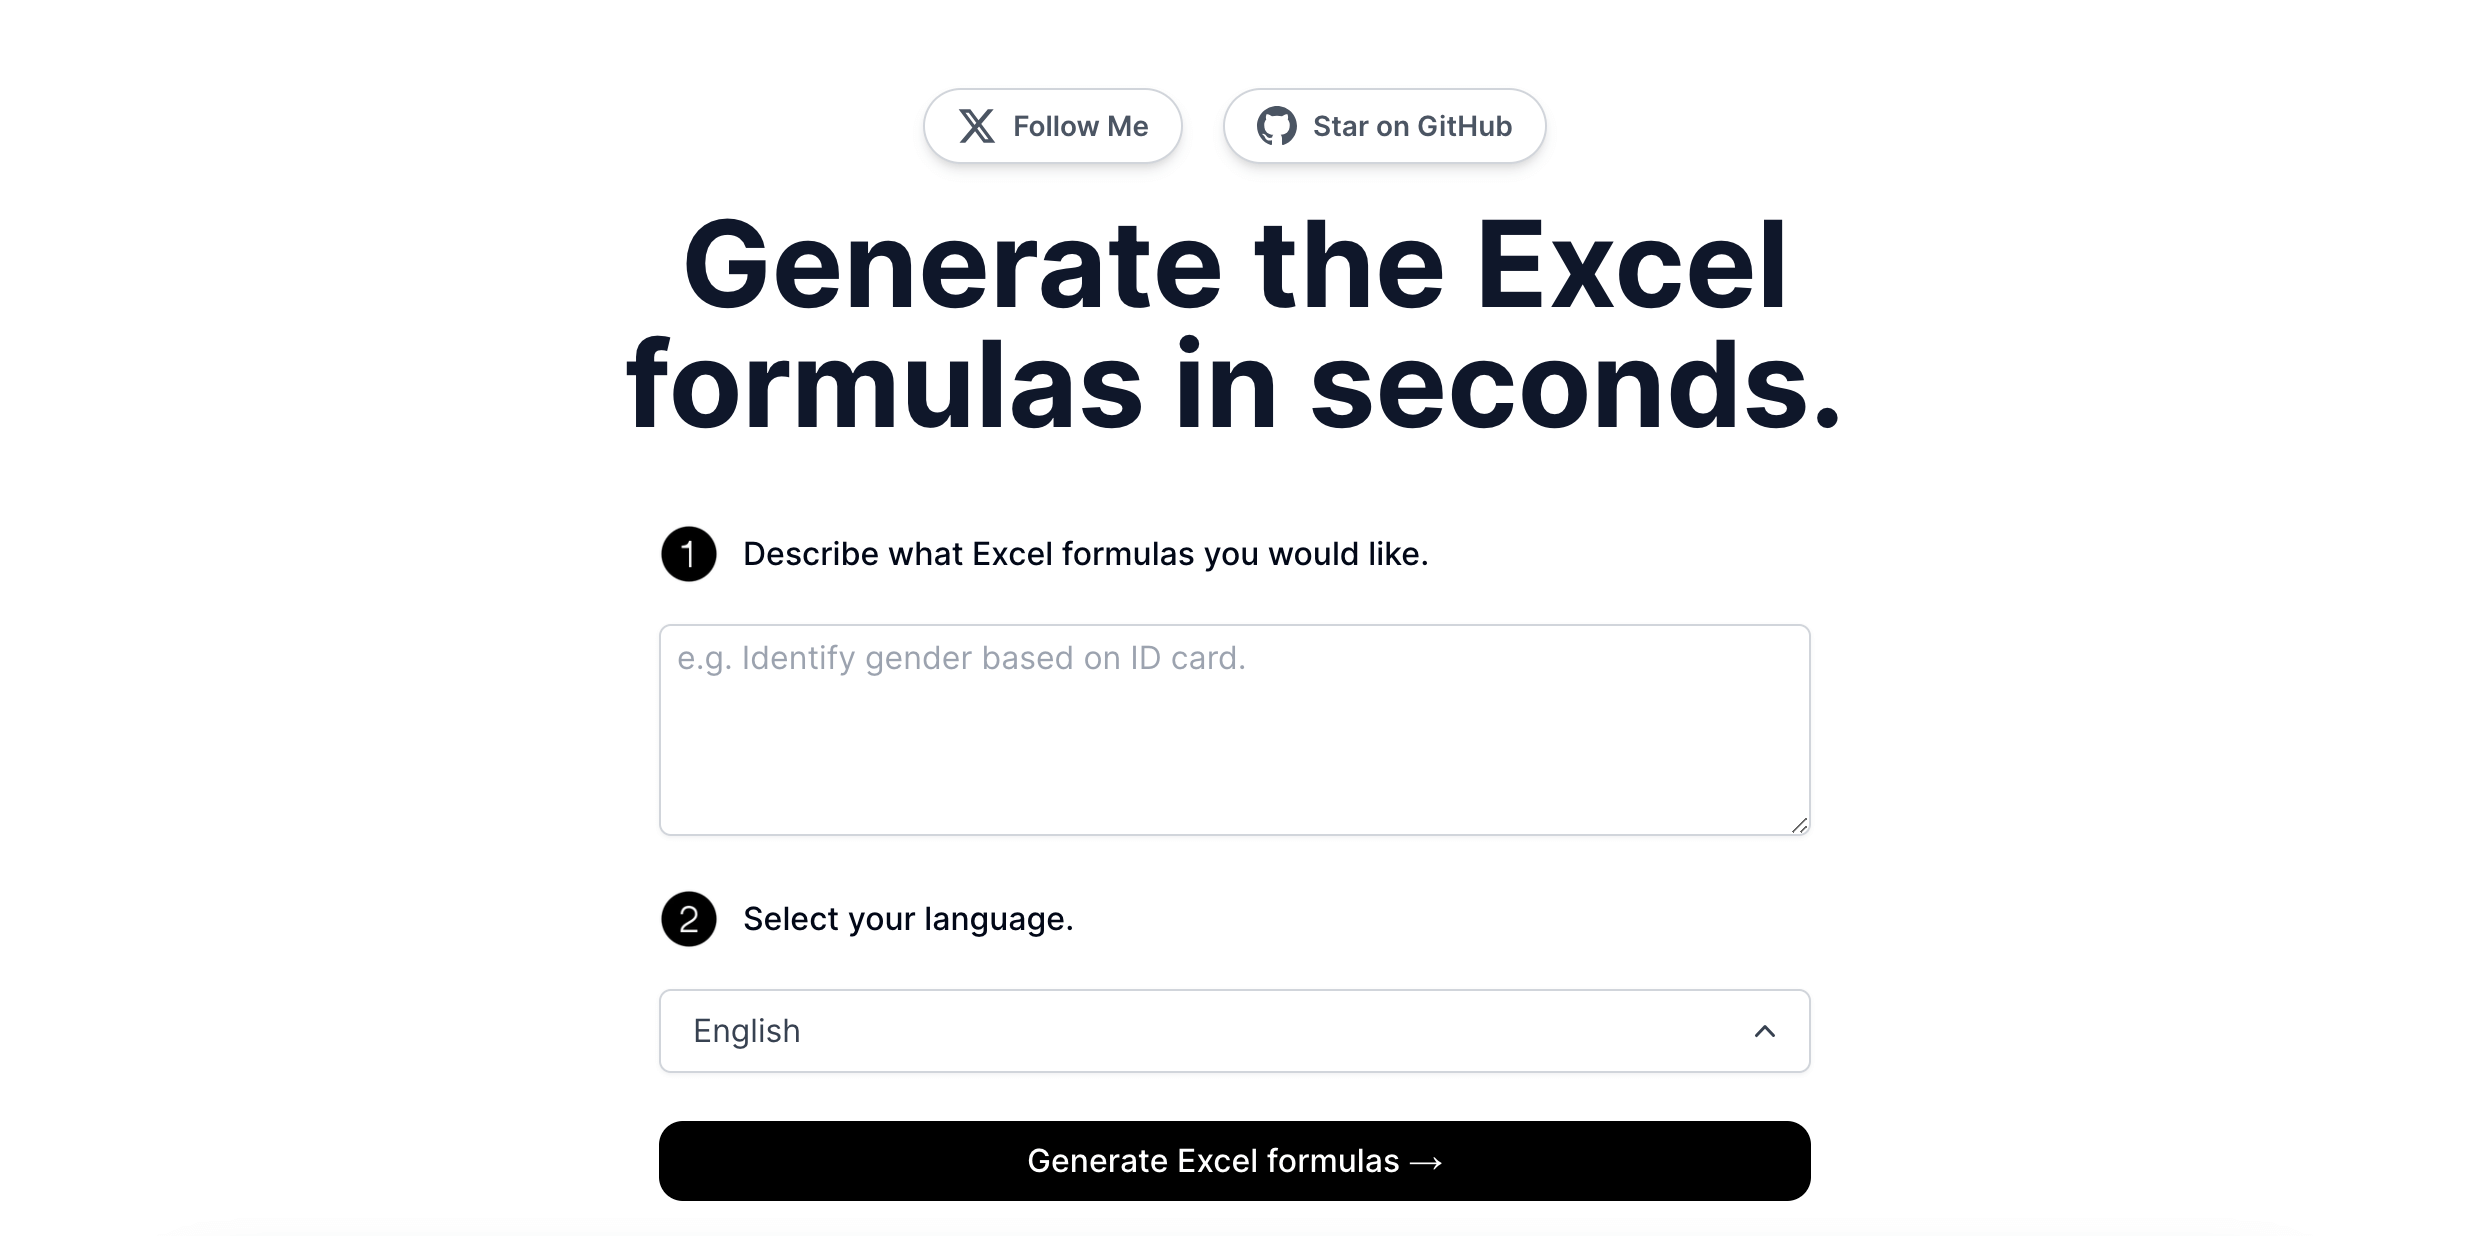 Generate the Excel formulas